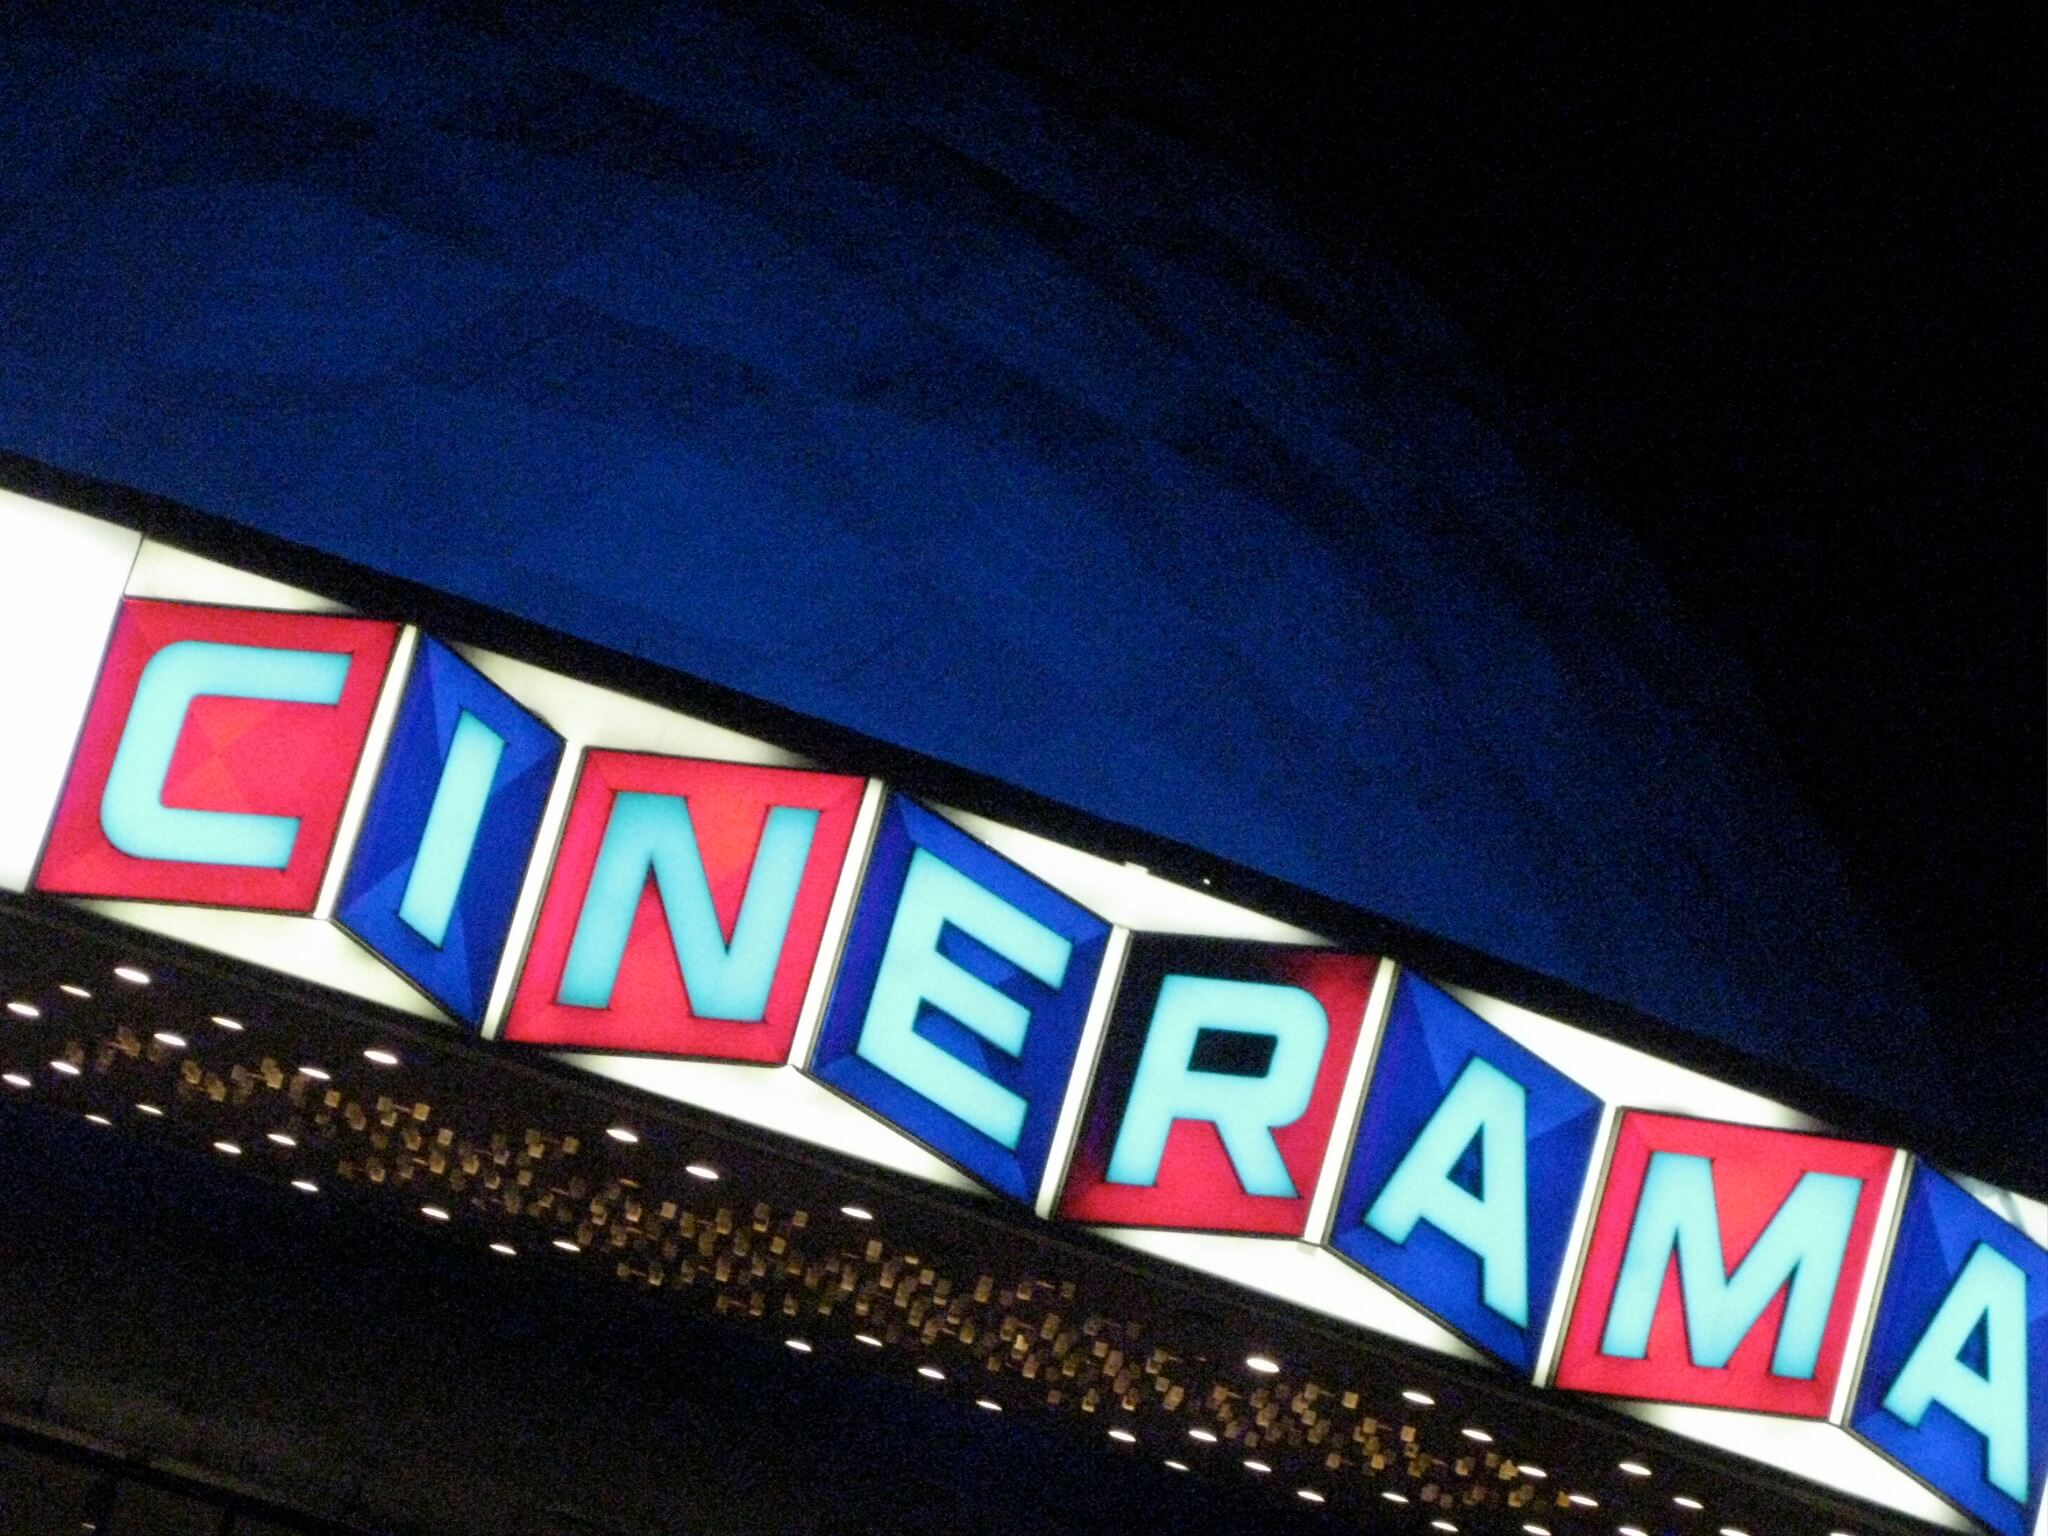 cinerama dome at night